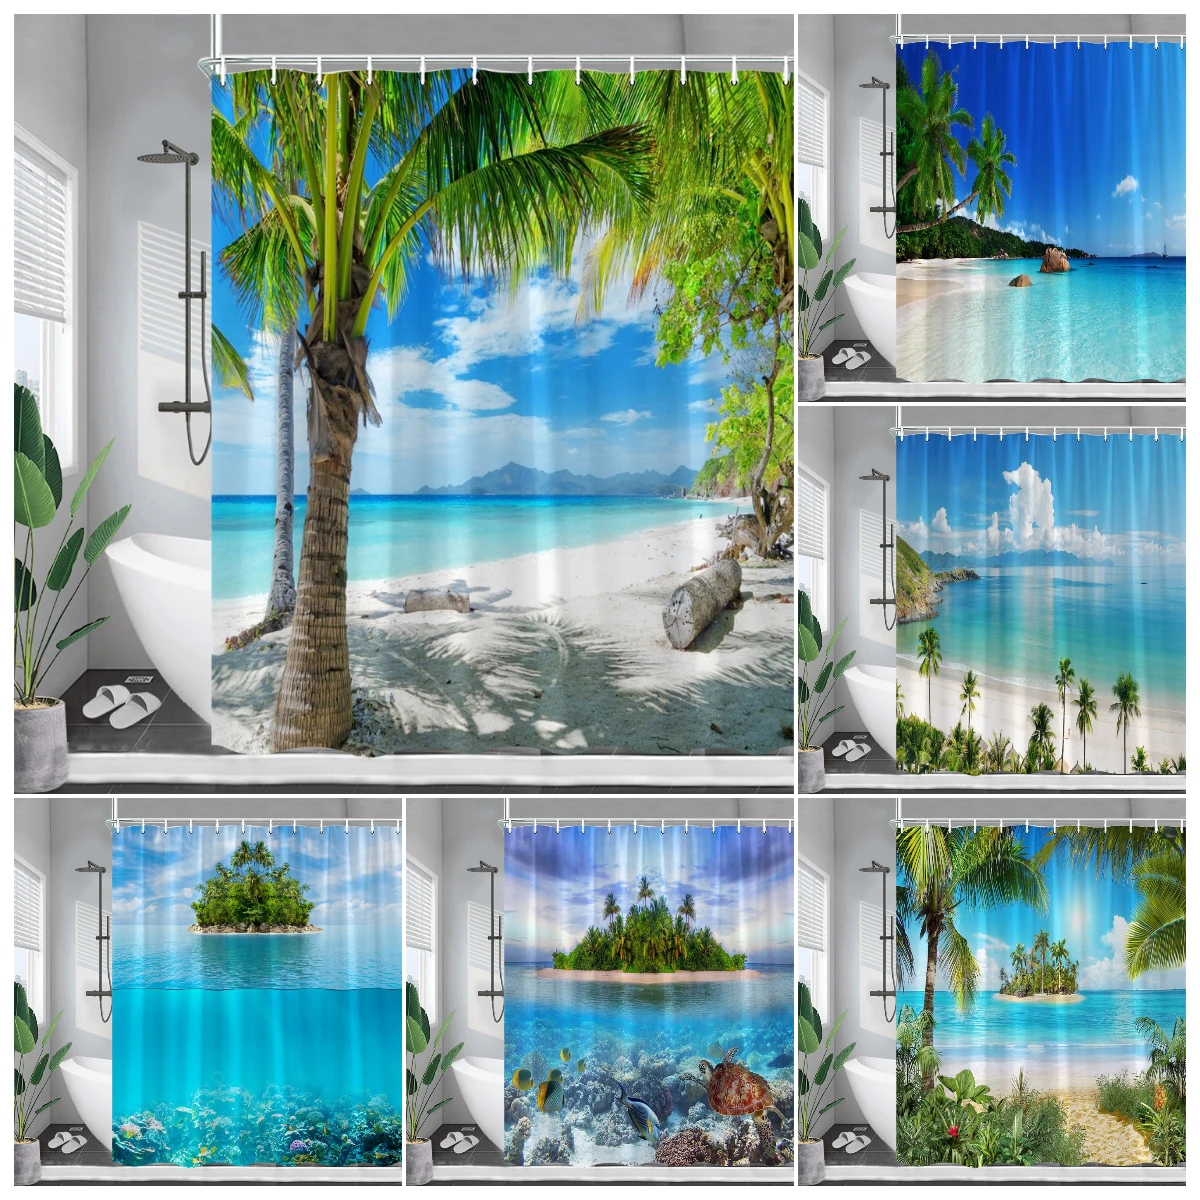 

Ocean Beach Shower Curtain Island Coconut Trees Tropical Plants Sea Turtle Nature Landscape Wall Hanging Bathroom Curtains Decor